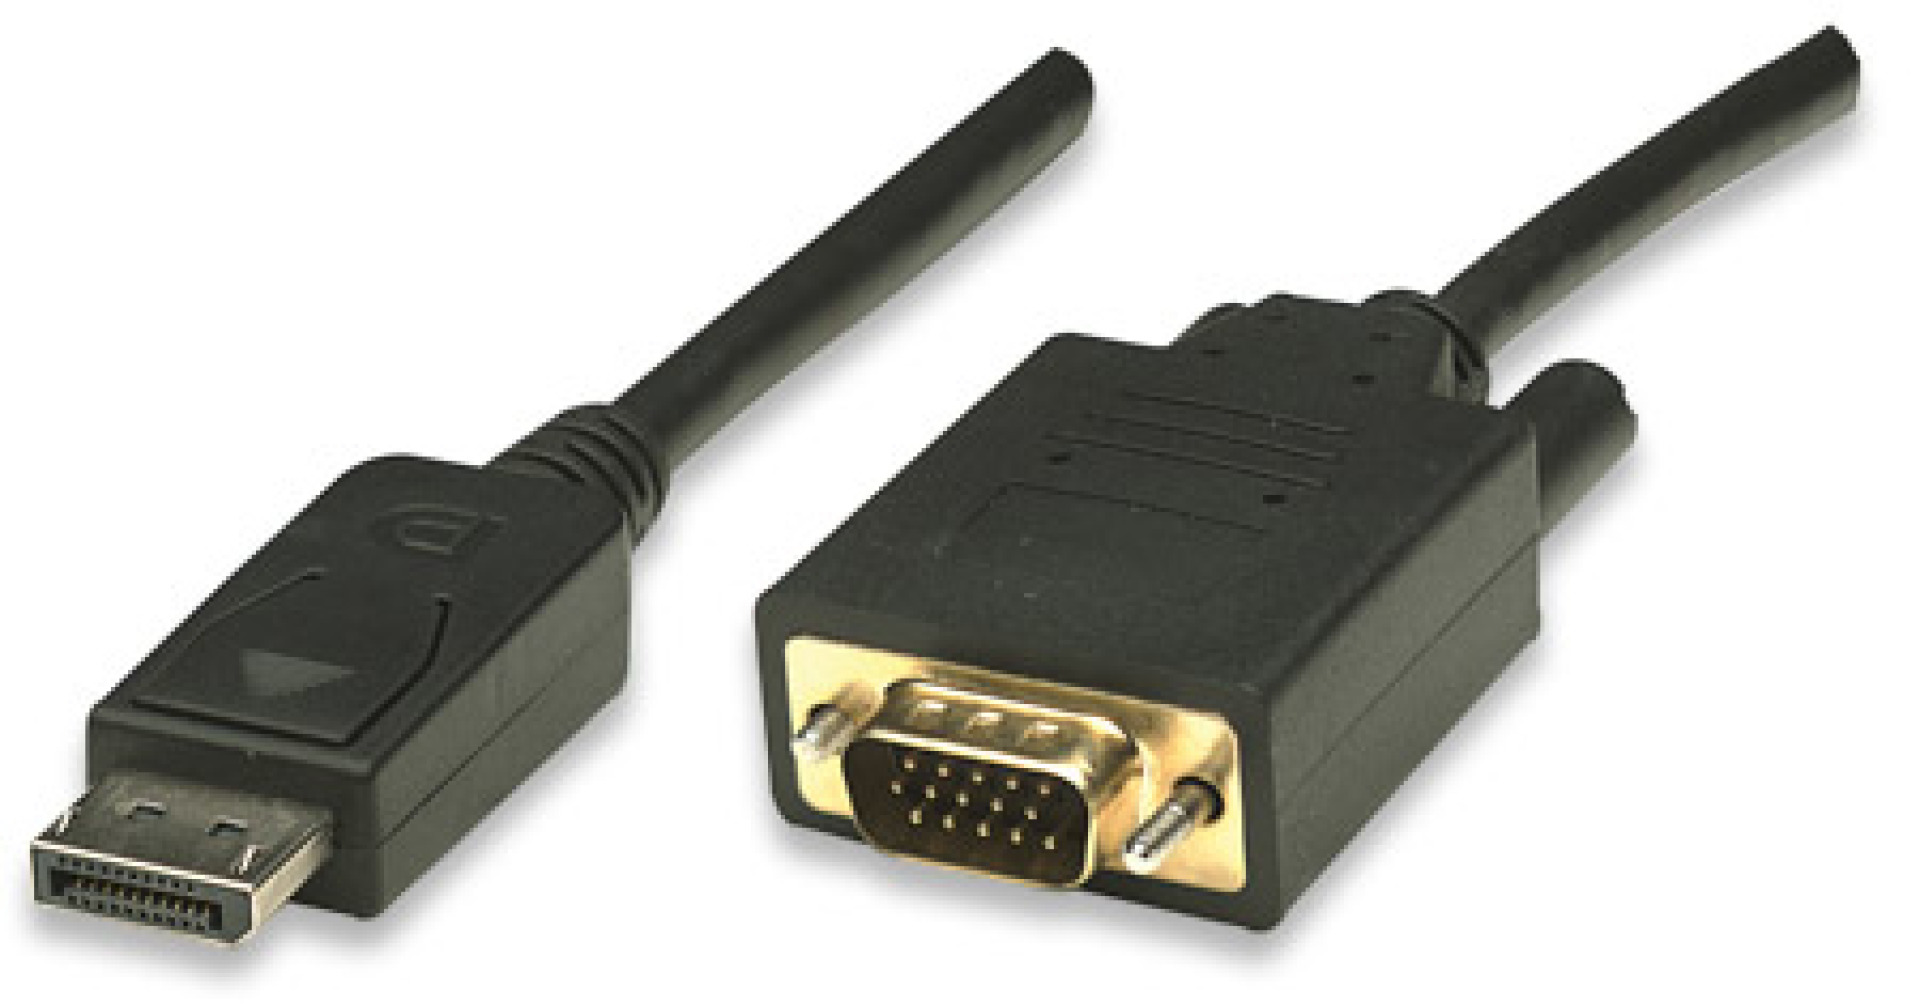 DisplayPort to VGA converter cable, black, 3 m